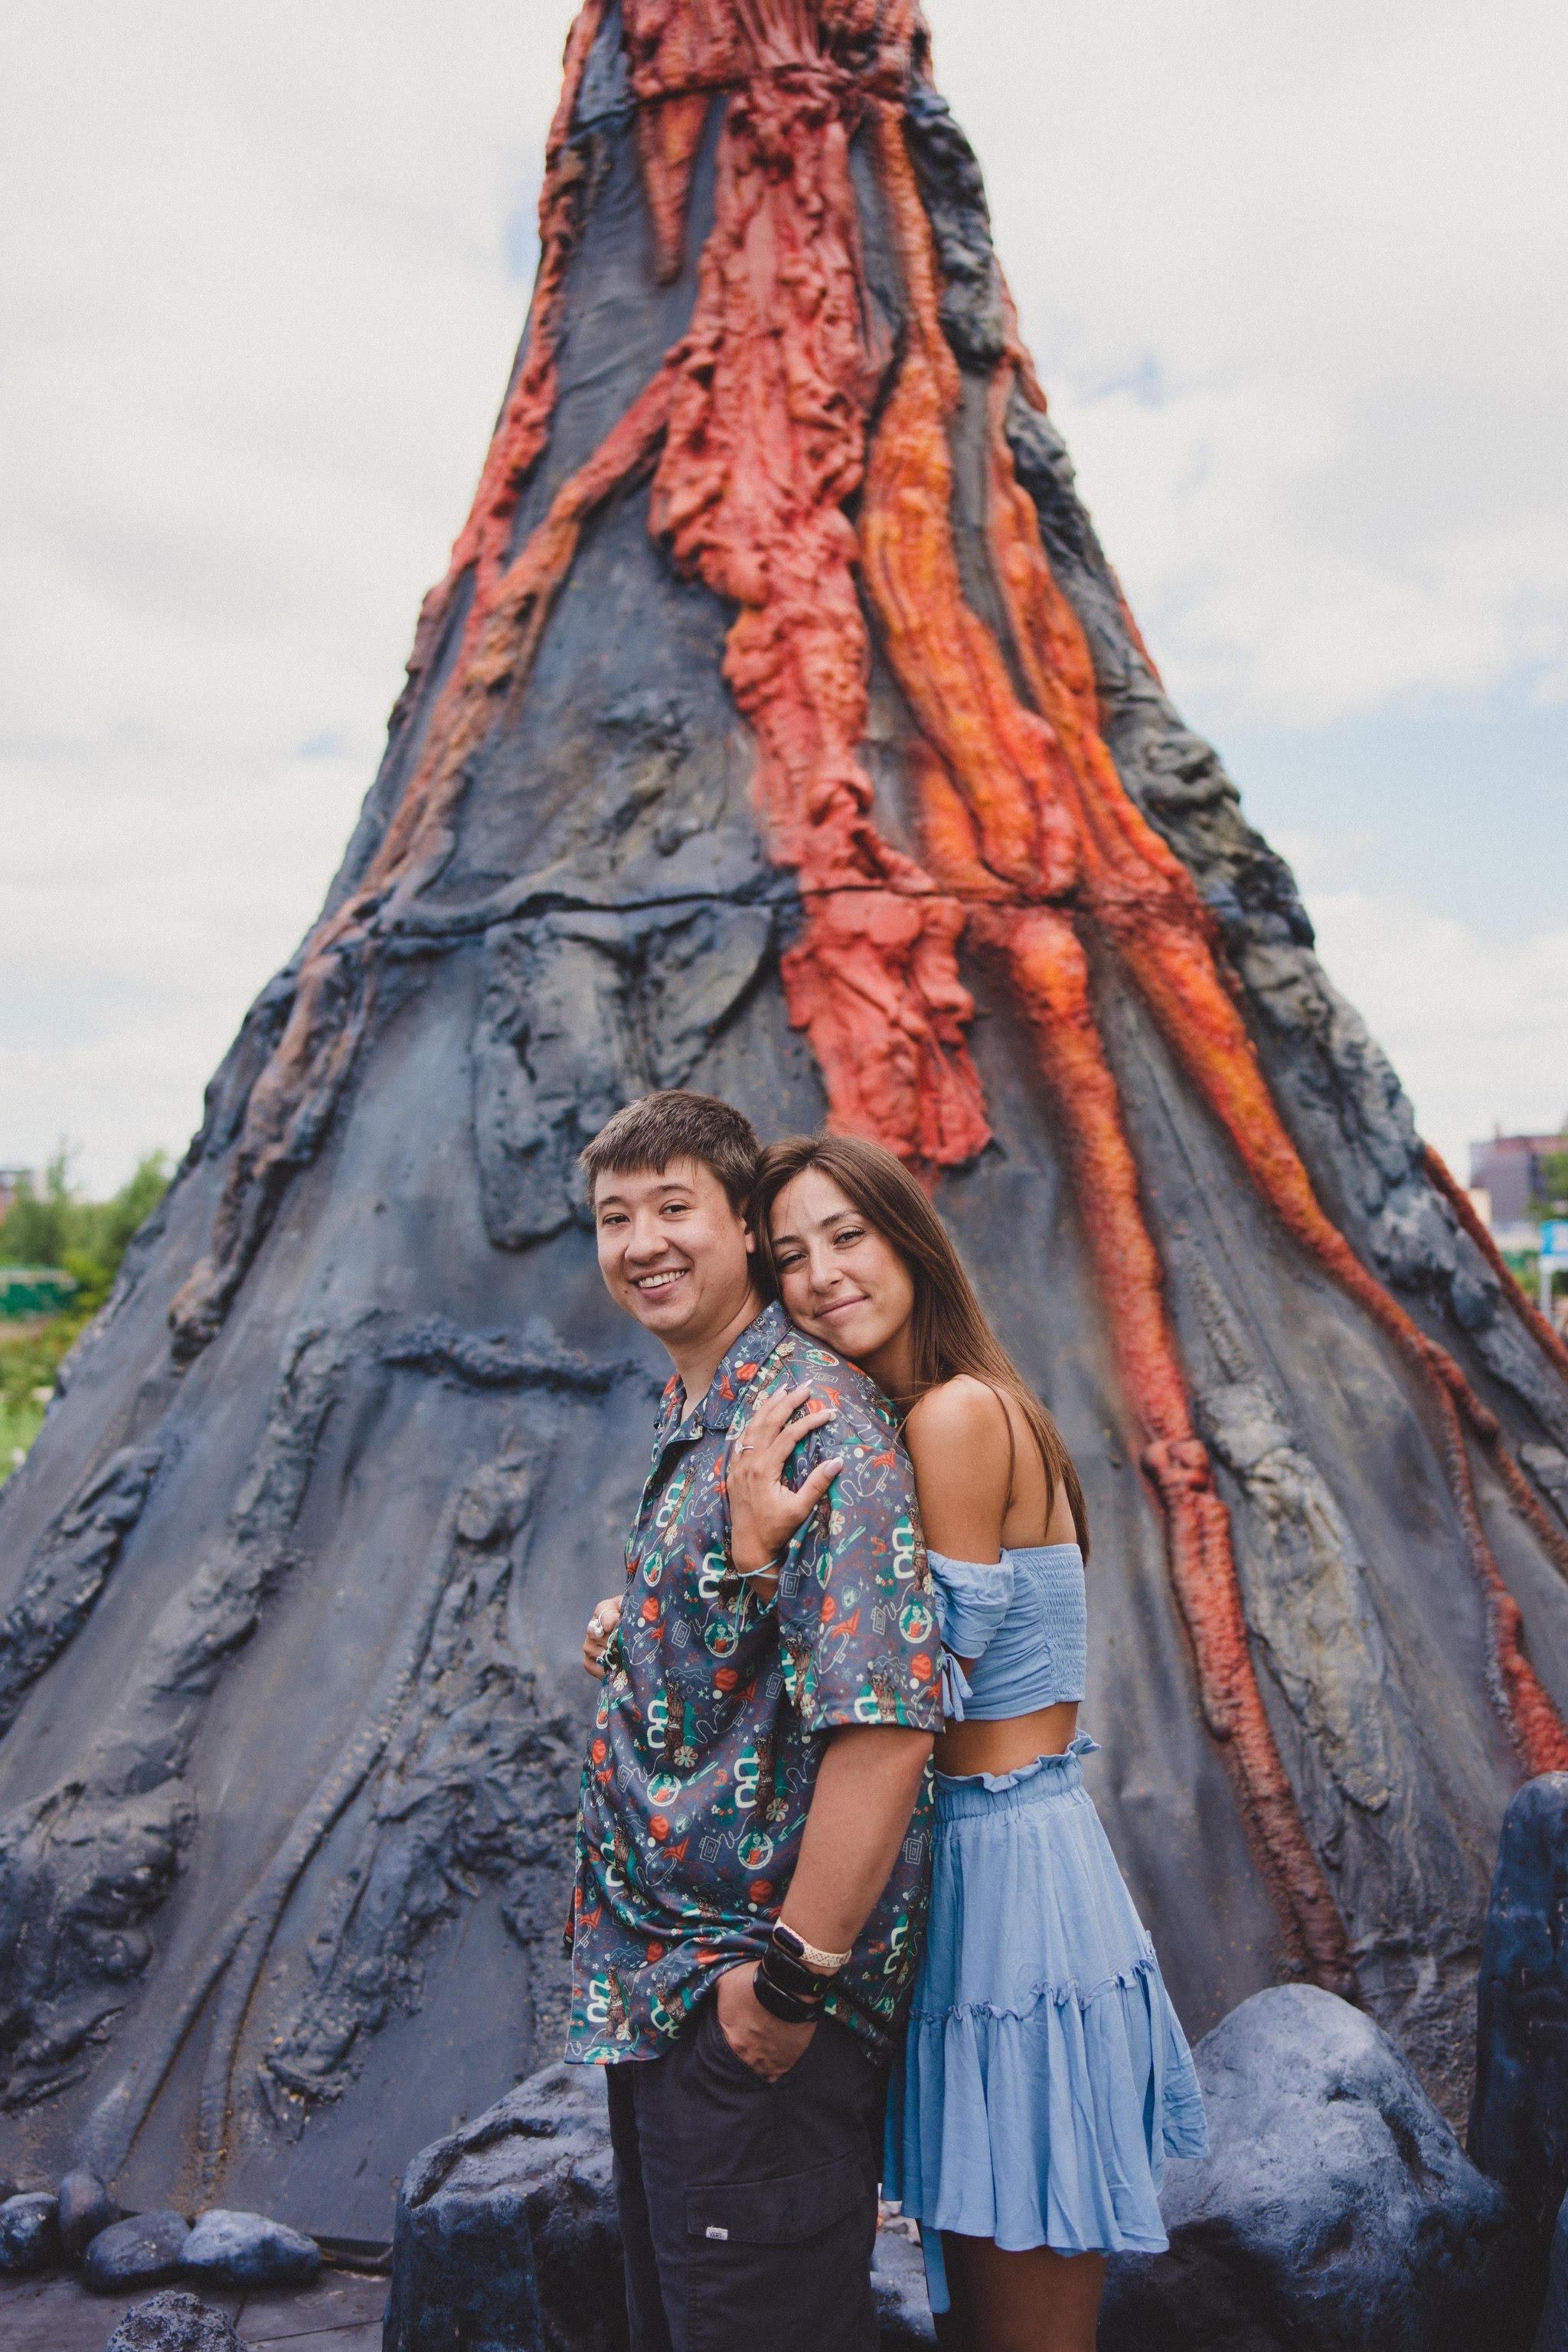 Brad 和 Kelsi 在 NYC GO Fest 的火山前合影留念。